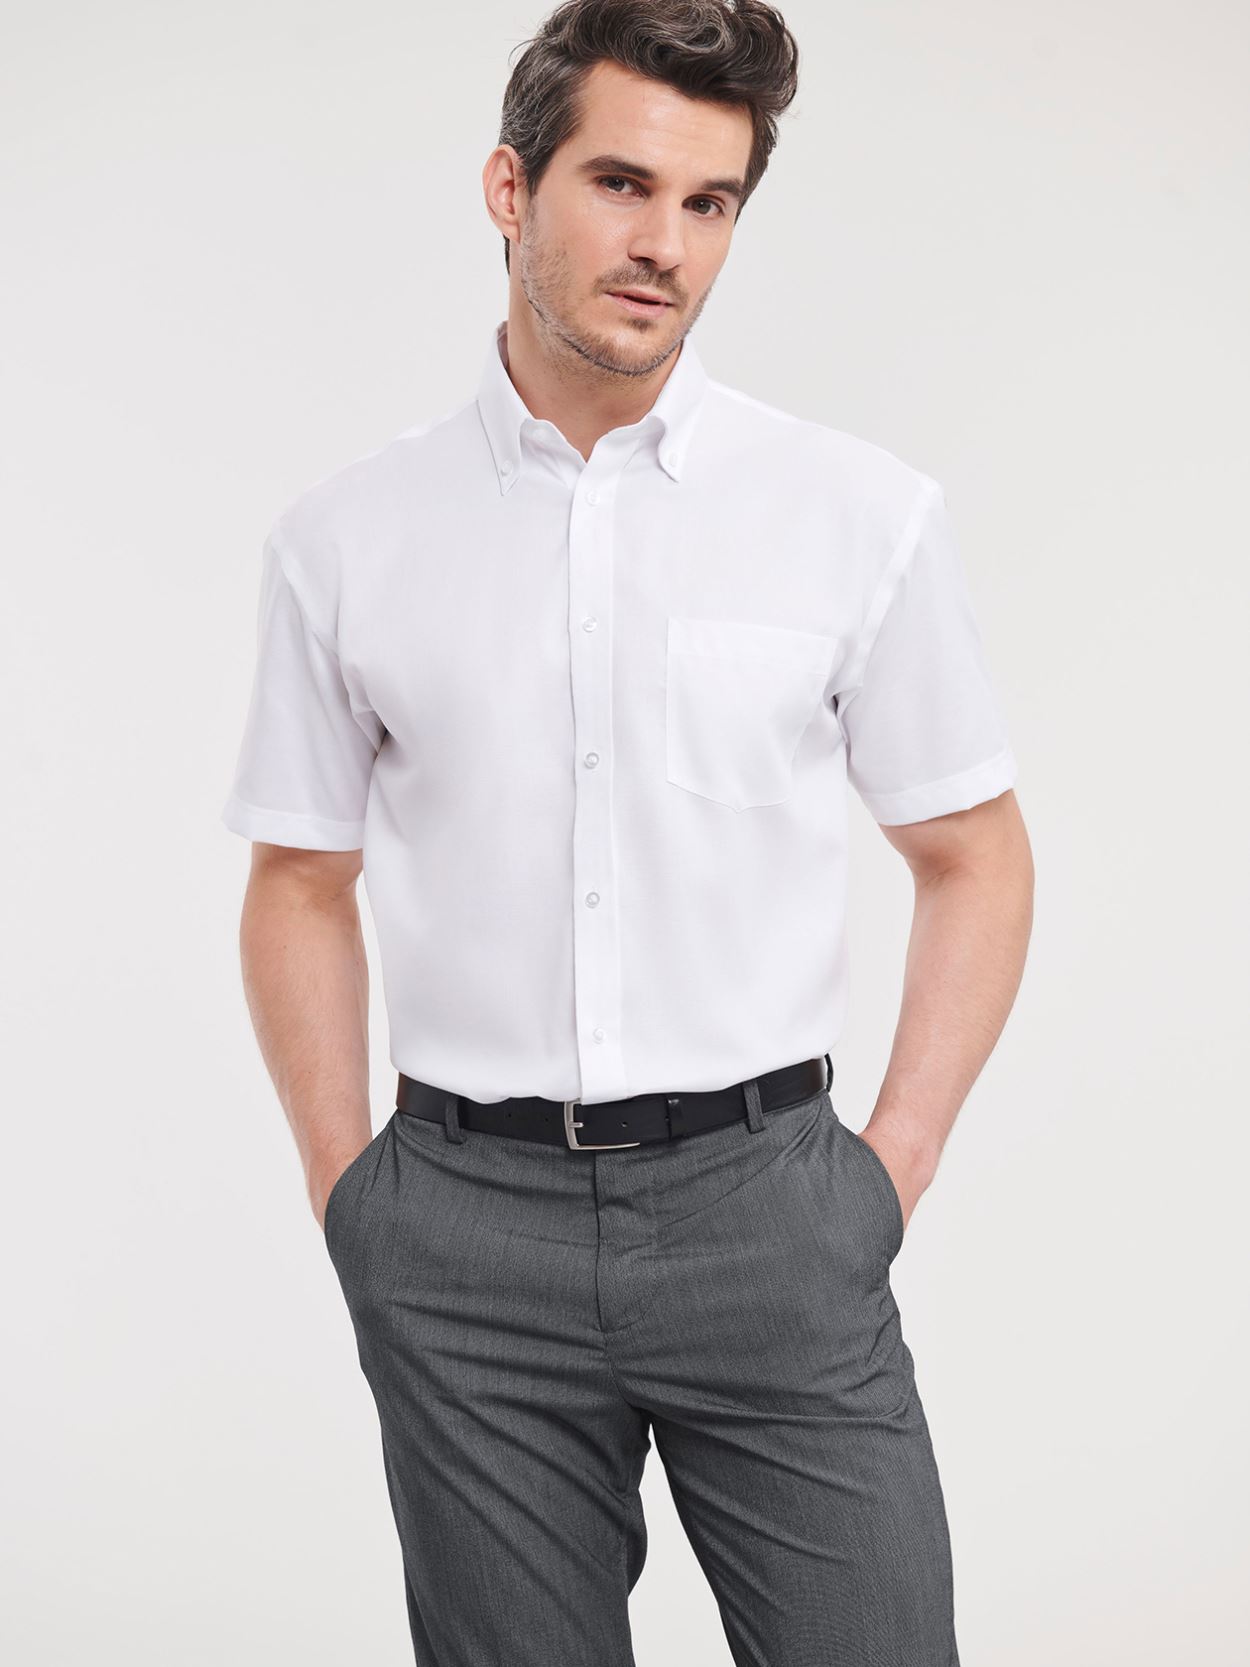 957M Mens Short Sleeve Ultimate Non Iron Luxury Shirt Image 3